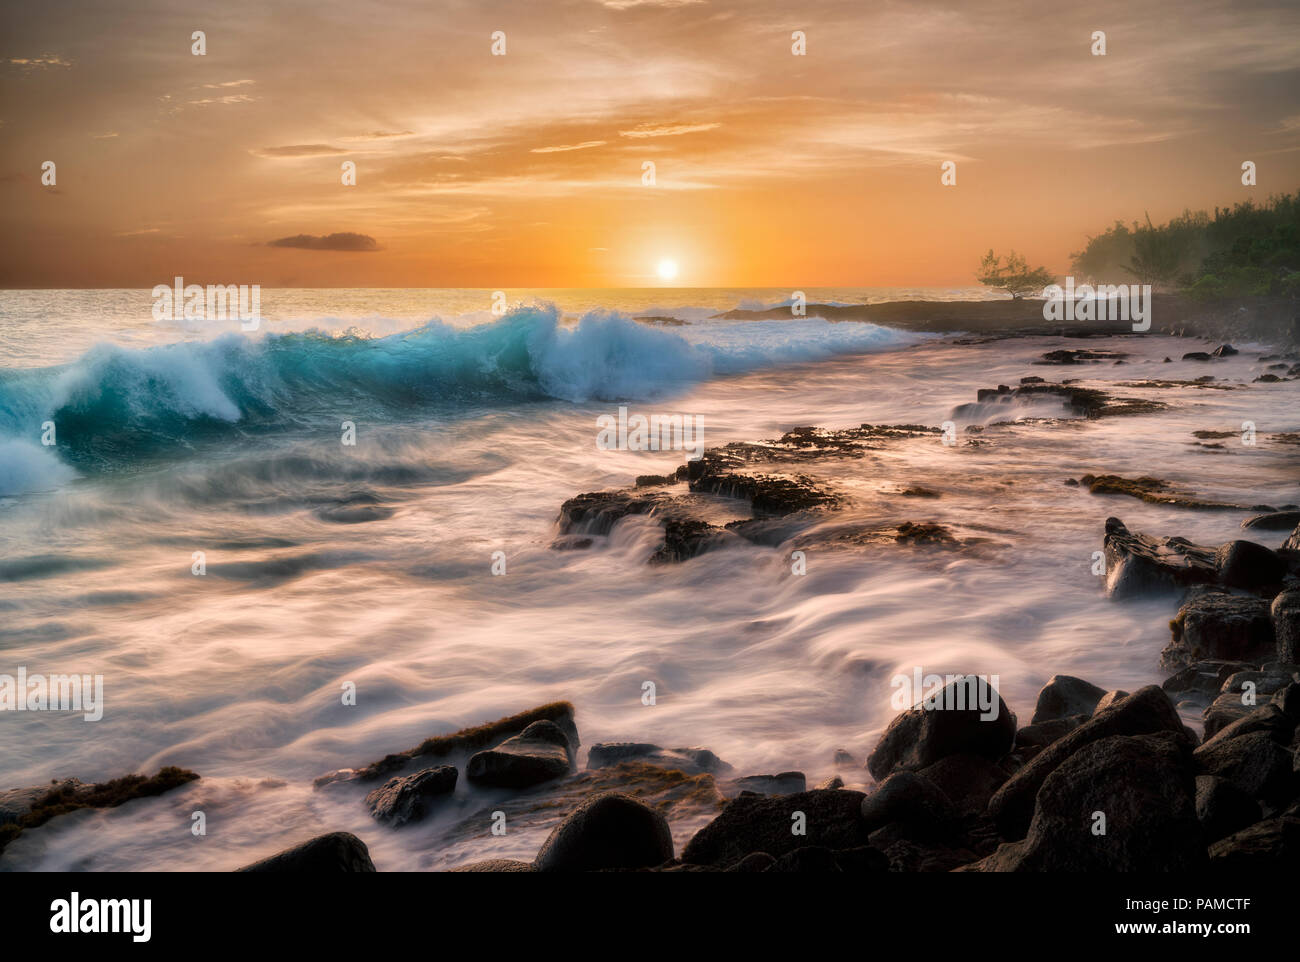 Waves and sunrise. The Puna Coast, Hawaii, The Big Island Stock Photo